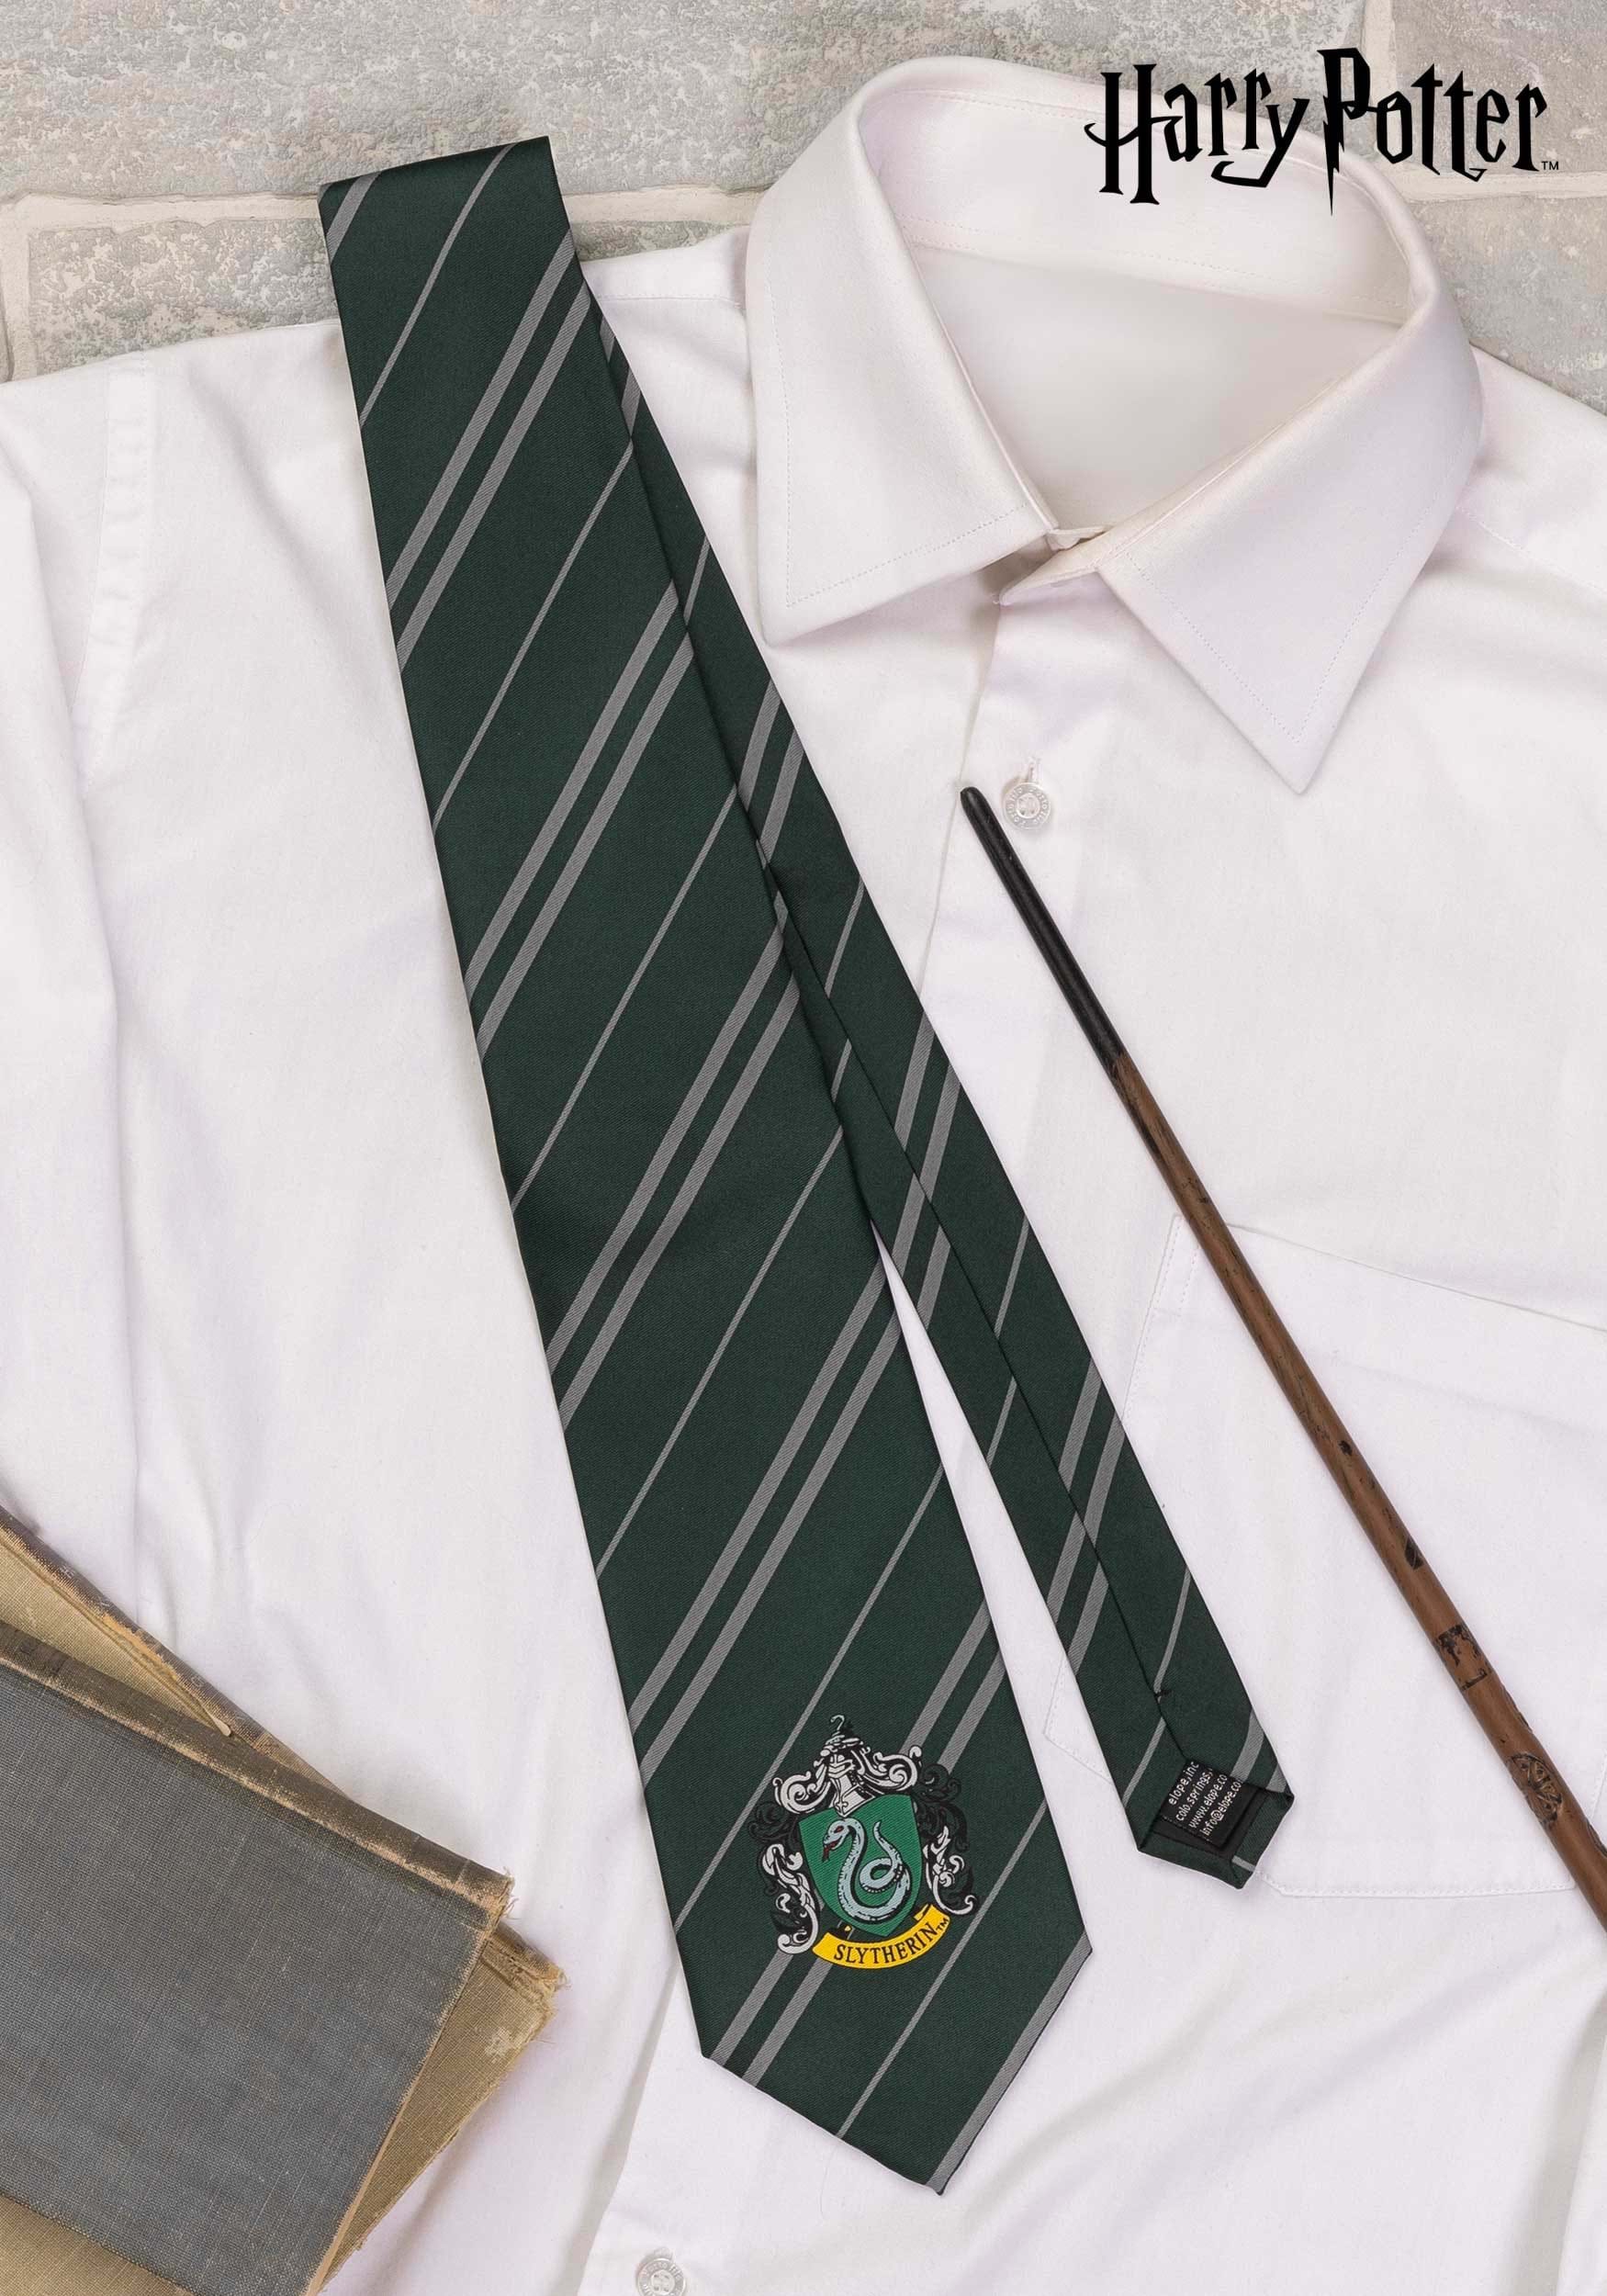 Slytherin Harry Potter Adult's Tie